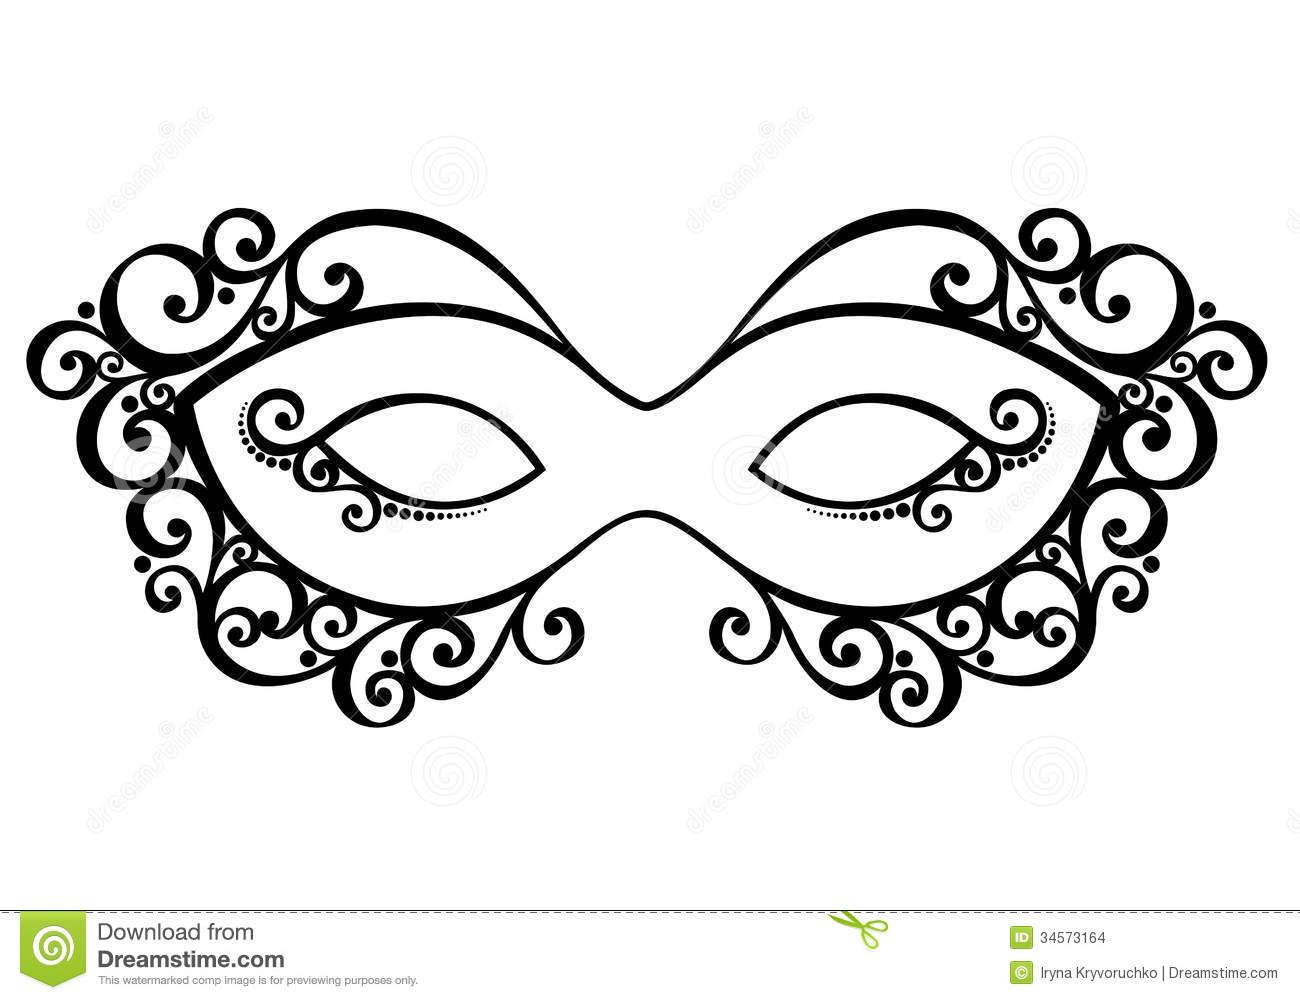 Best ideas about DIY Masquerade Mask Template
. Save or Pin Best 25 Masquerade mask template ideas on Pinterest Now.